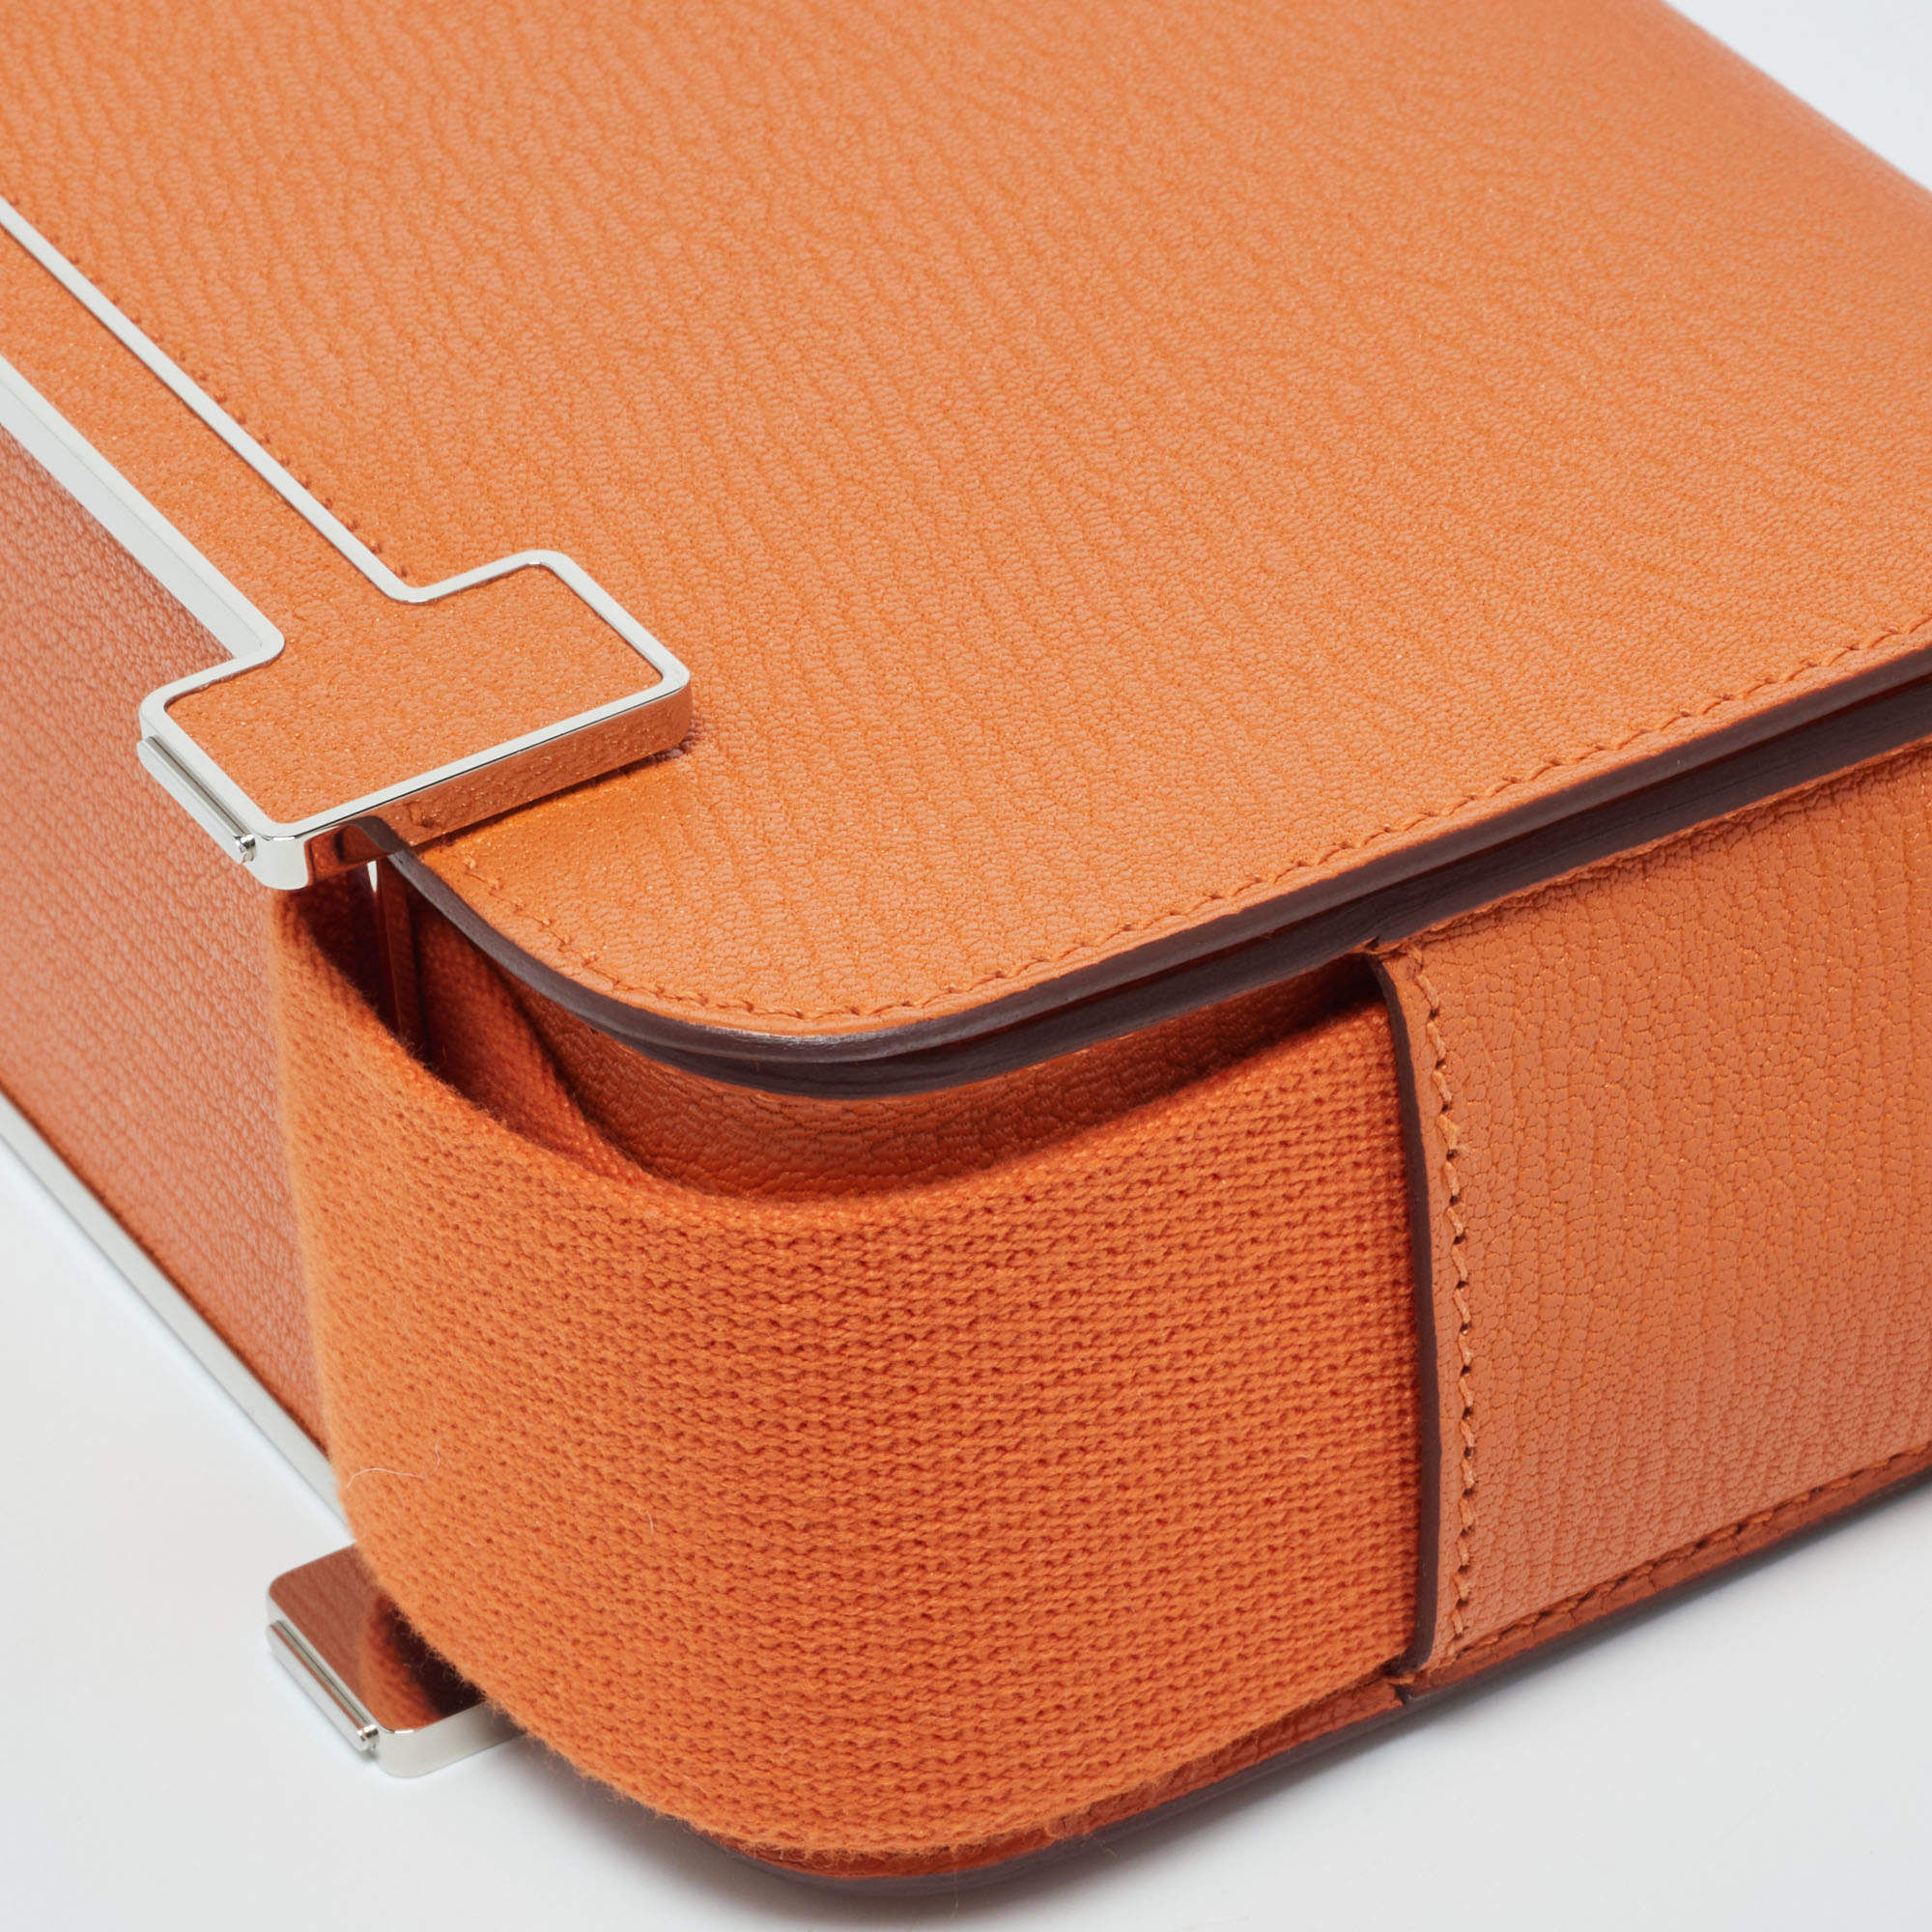 Hermès Orange Chèvre Mysore Leather Palladium Finish Geta Sangle Bag Hermes